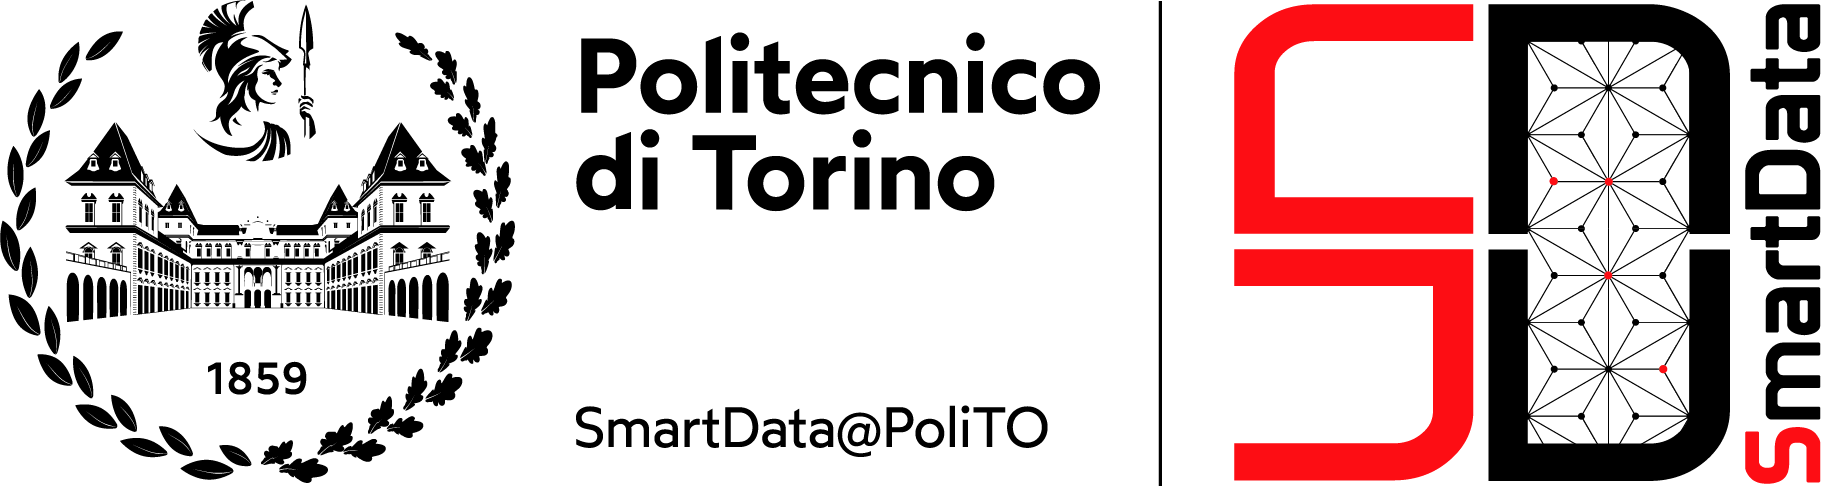 Data Science and Big Data research center | SmartData@PoliTO